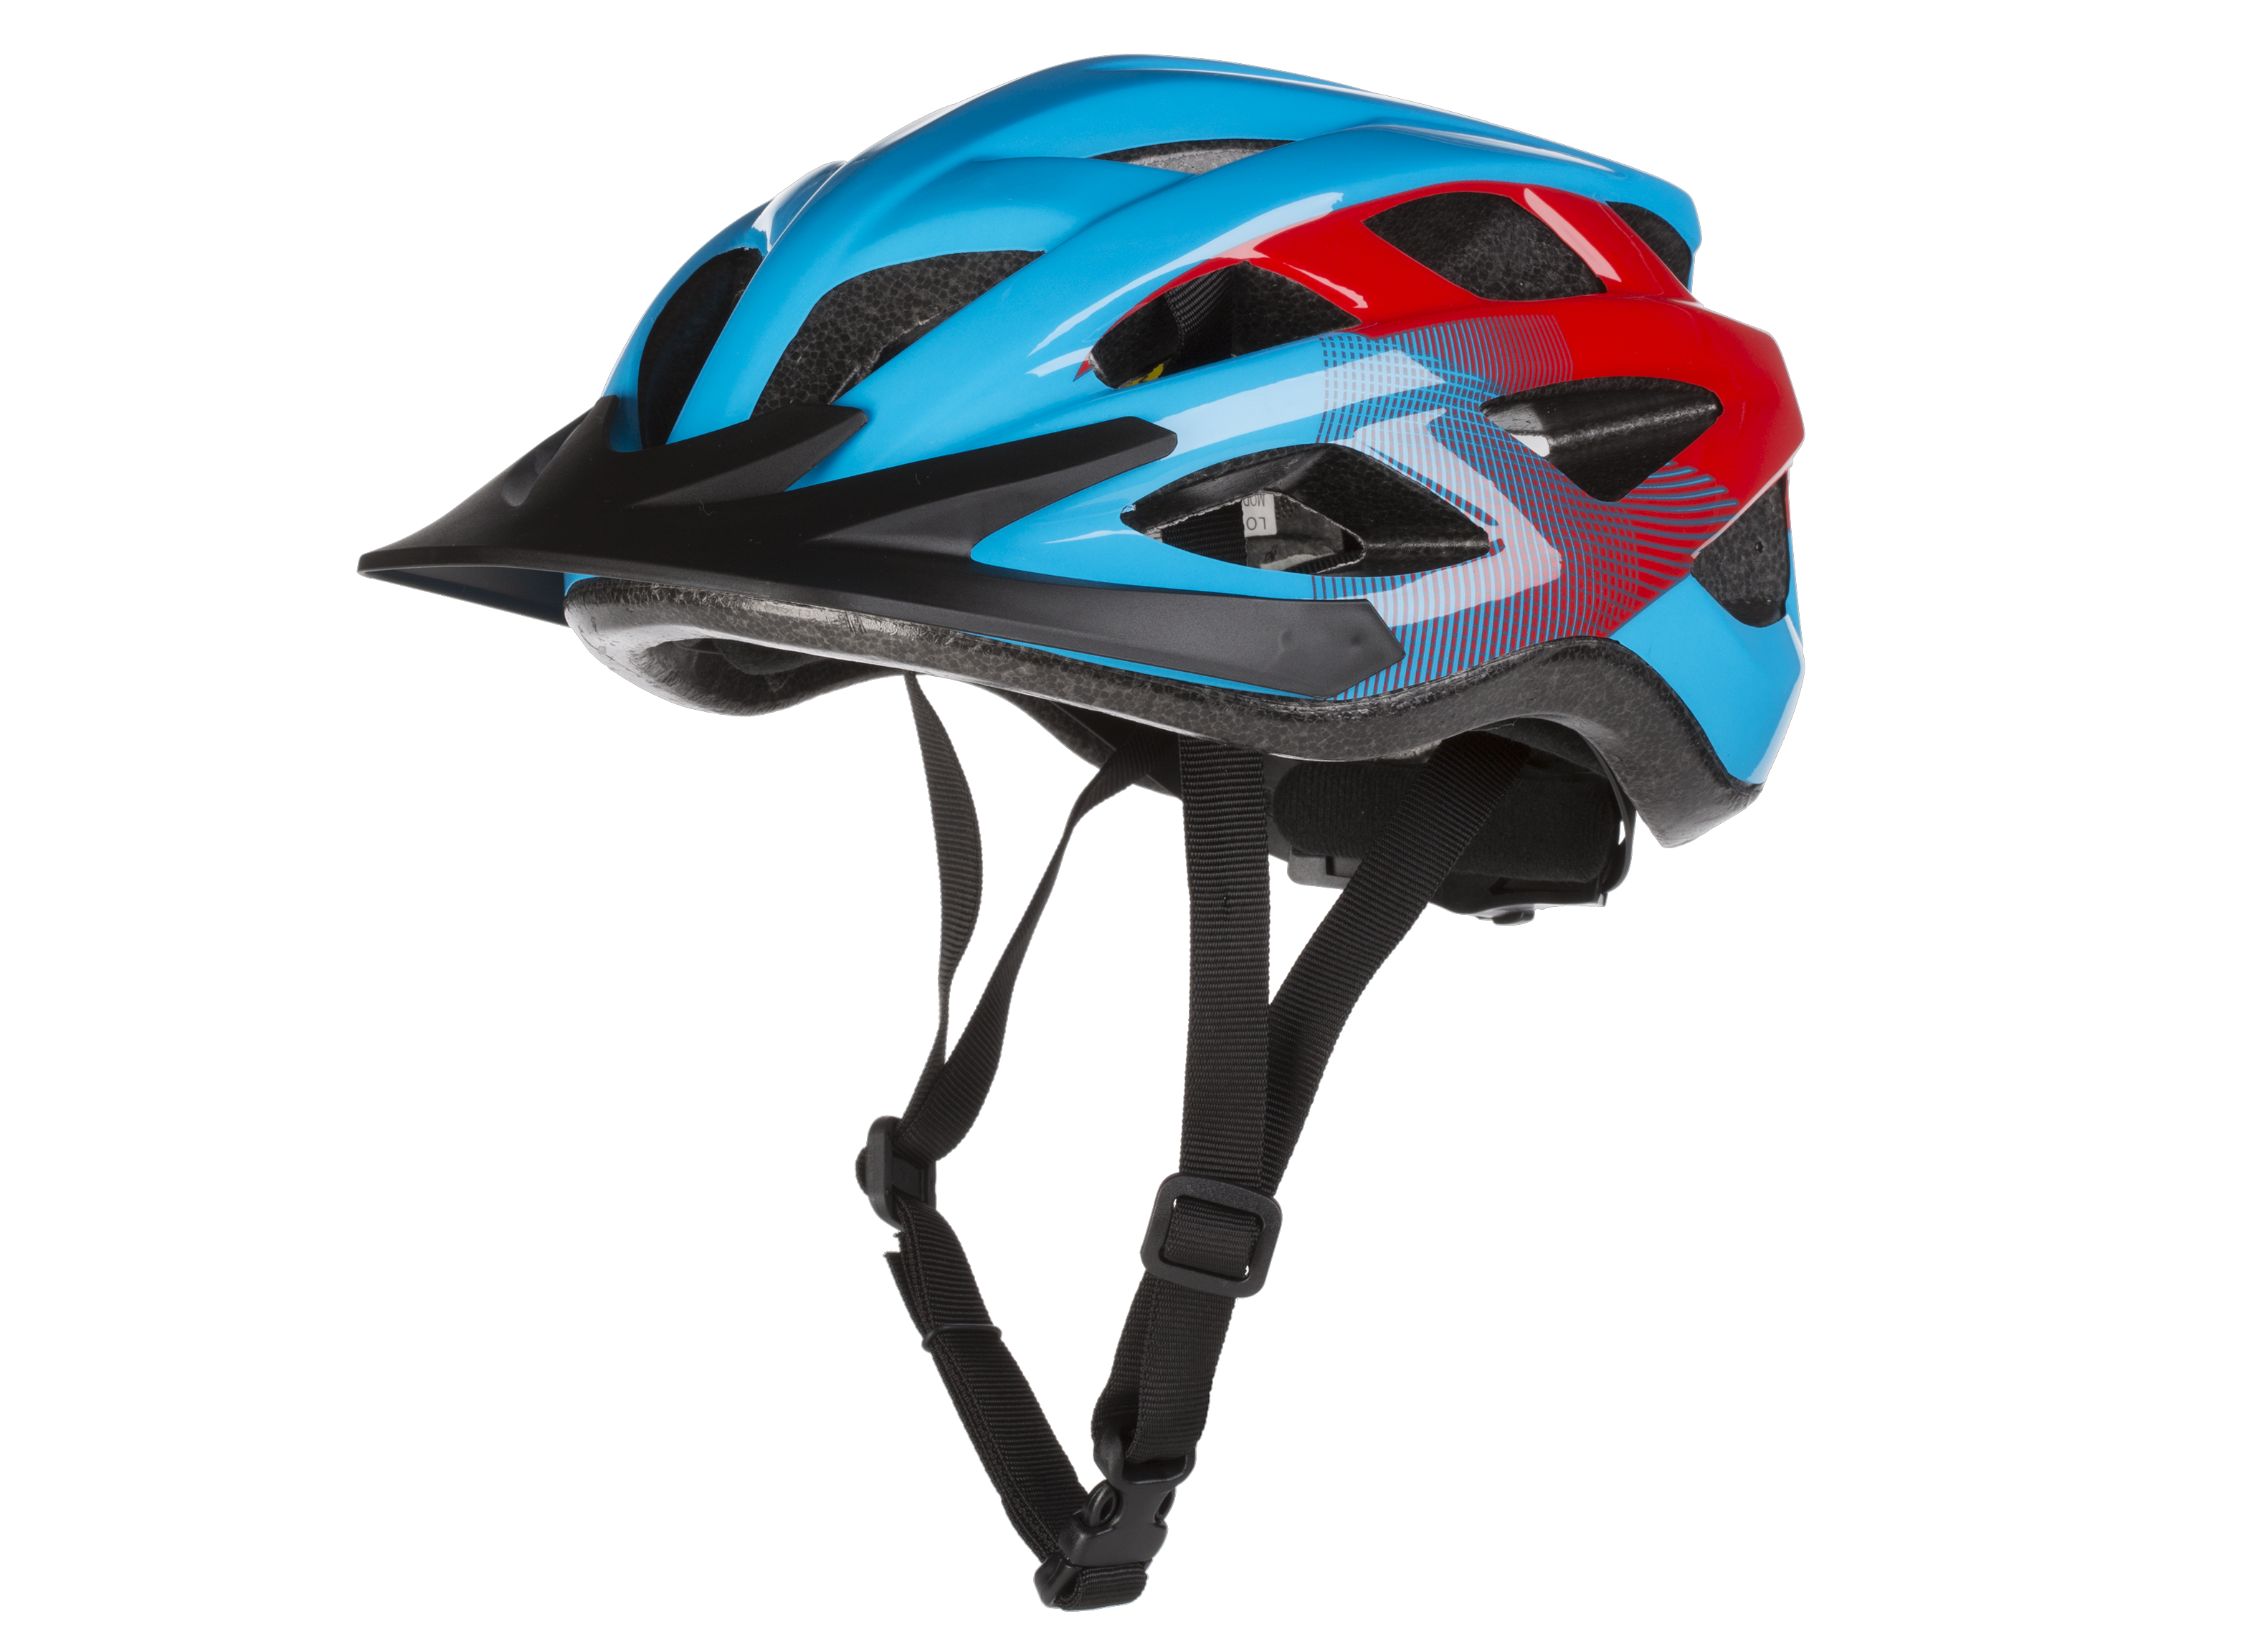 Red & Blue Details about   SCHWINN Breeze Youth Bike Helmet for Boys & Girls Age 8+ NEW 